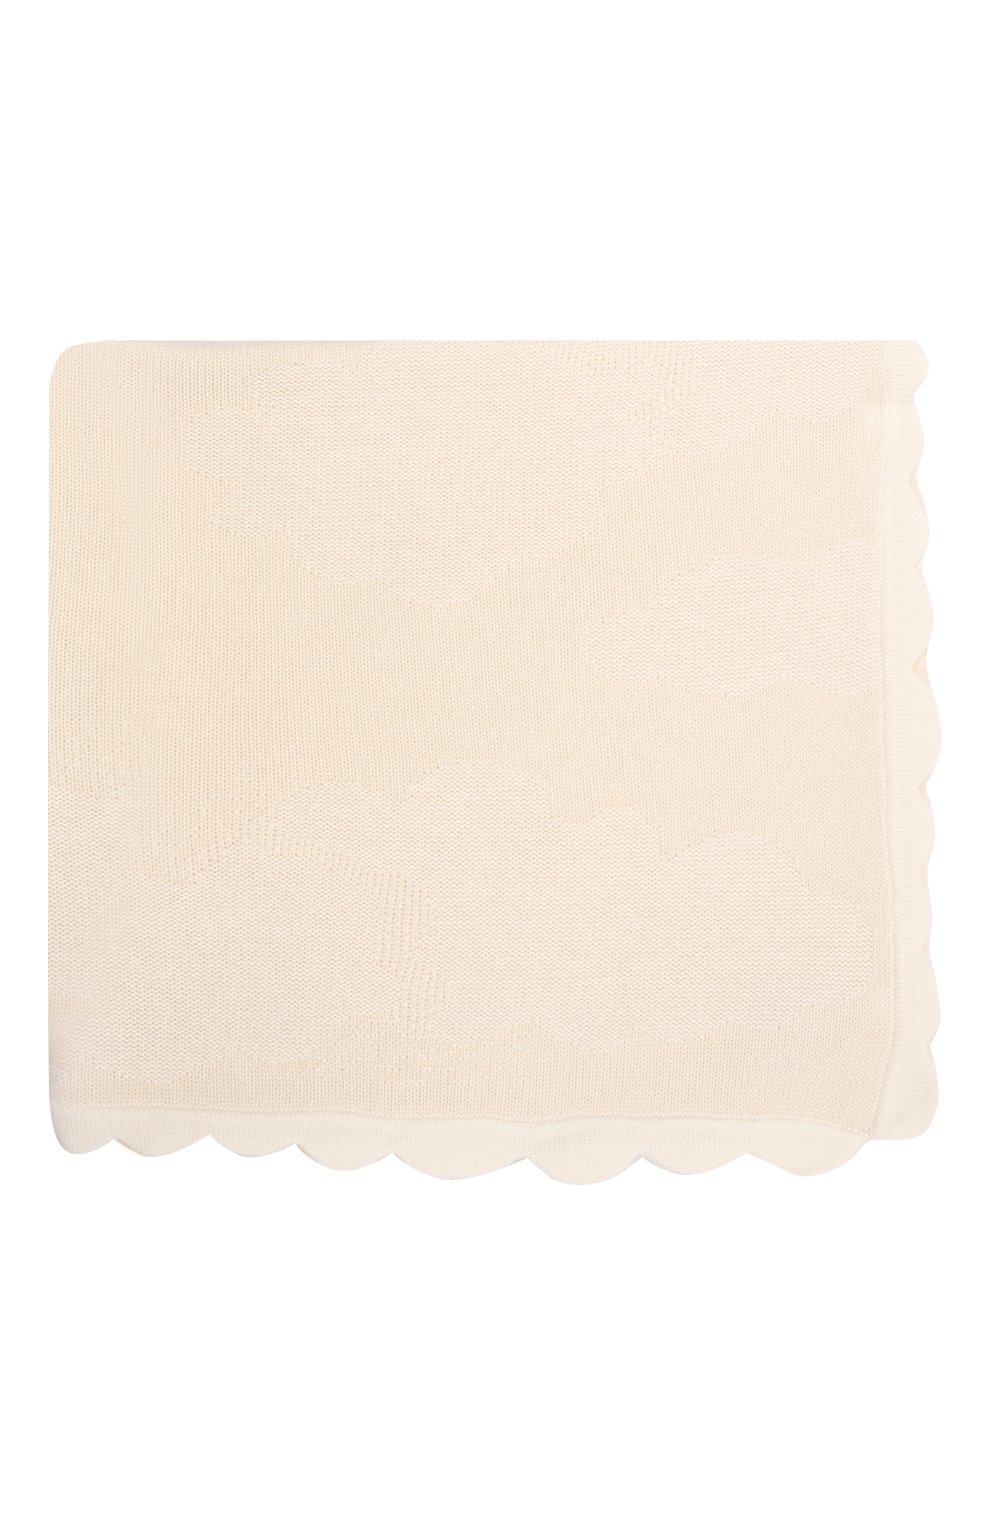 Детского кашемировое одеяло LORO PIANA кремвого цвета, арт. FAM1611 | Фото 2